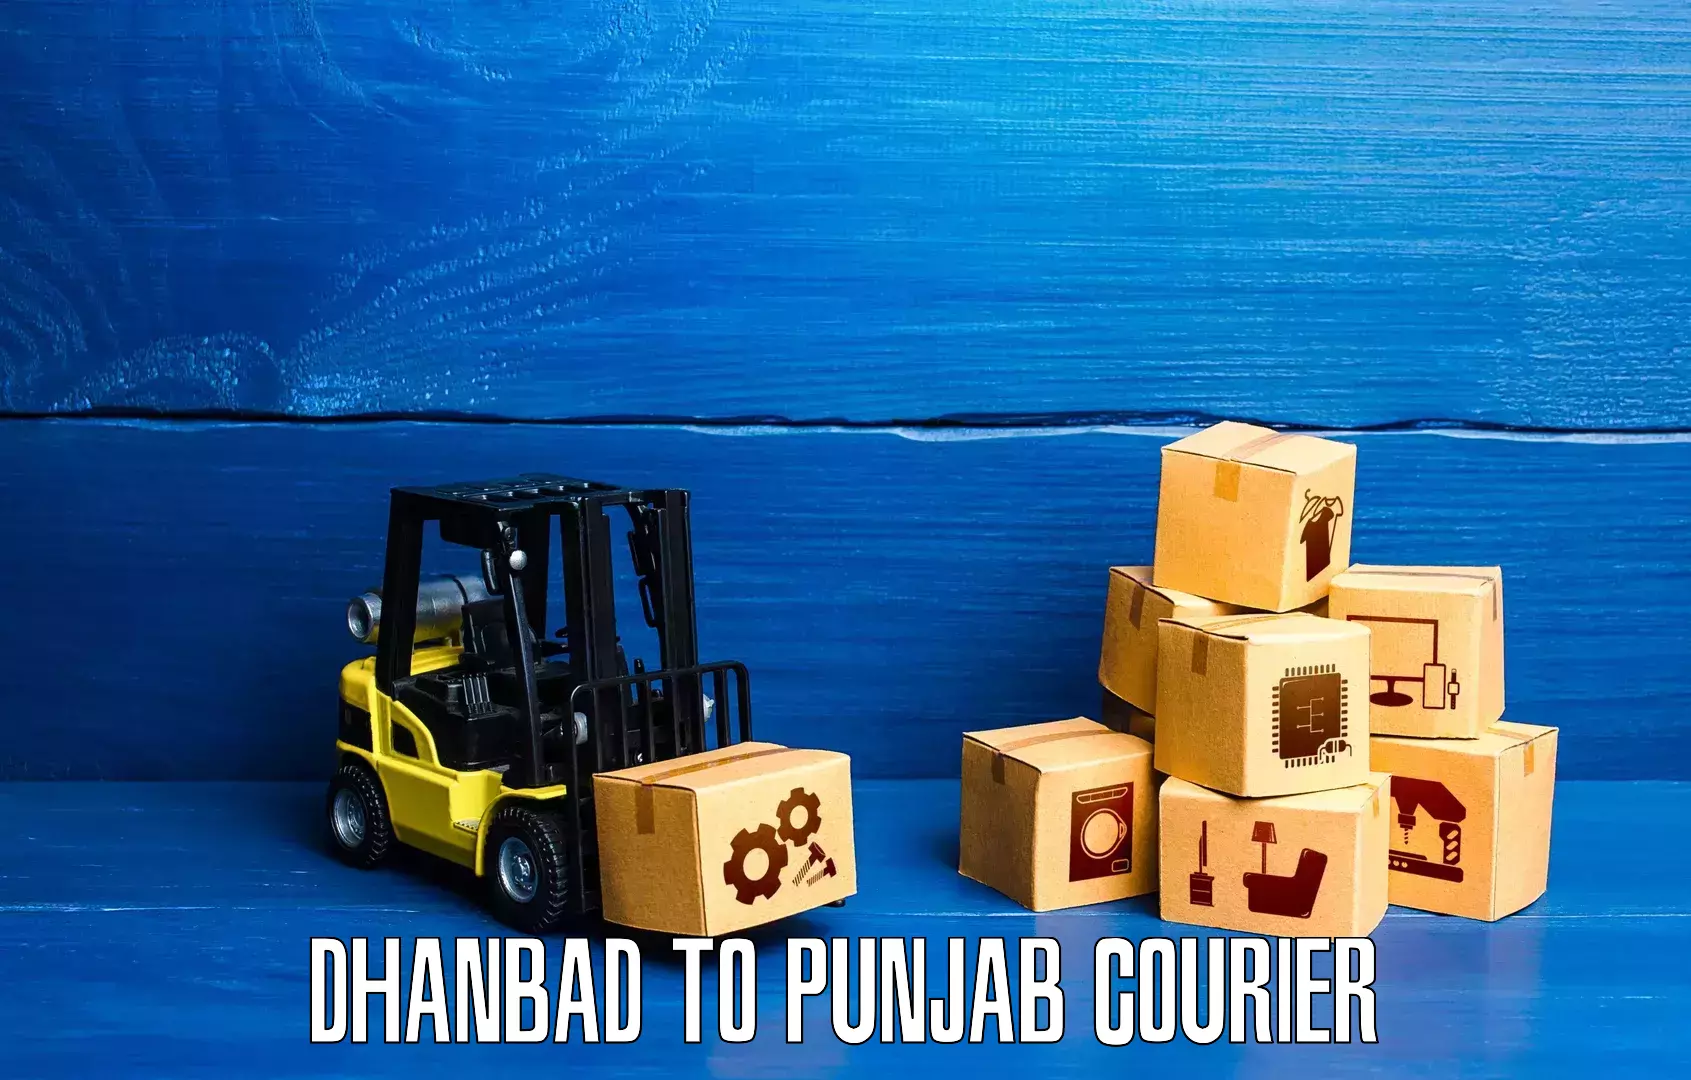 24/7 courier service Dhanbad to Jalandhar